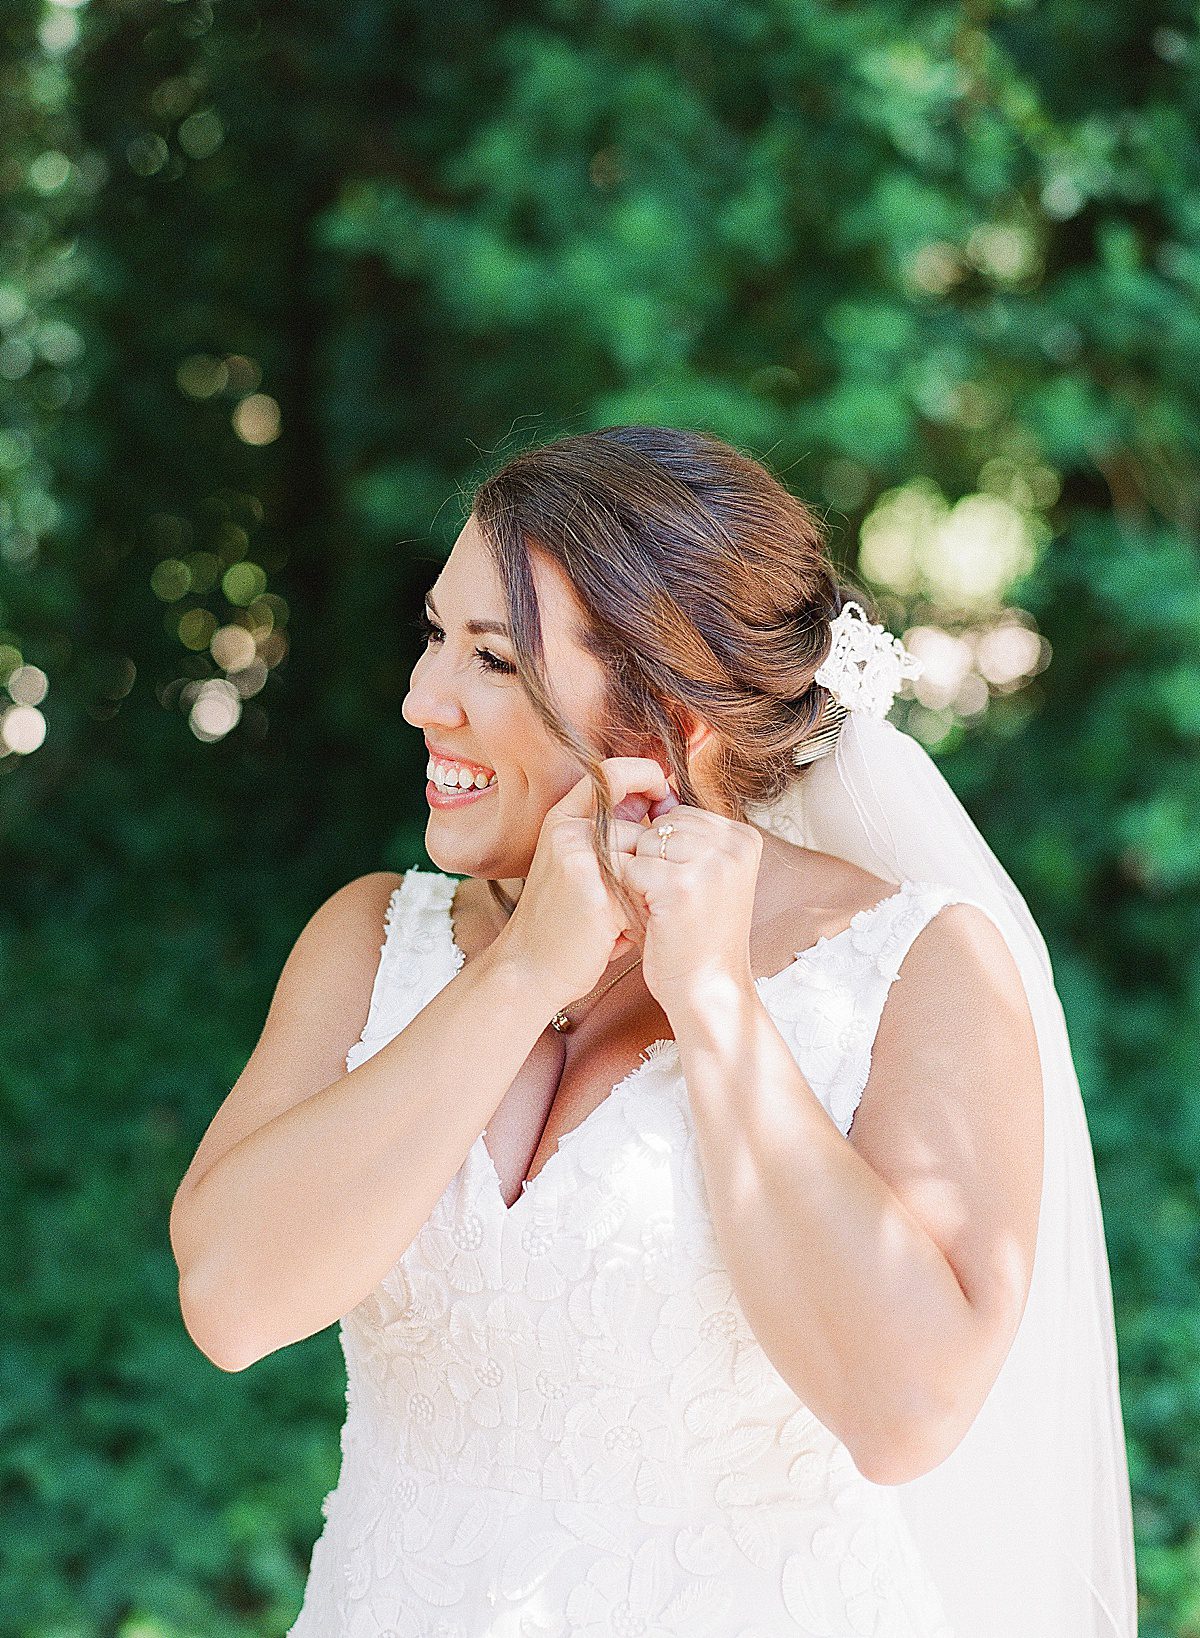 Bride Putting In Earrings Photo